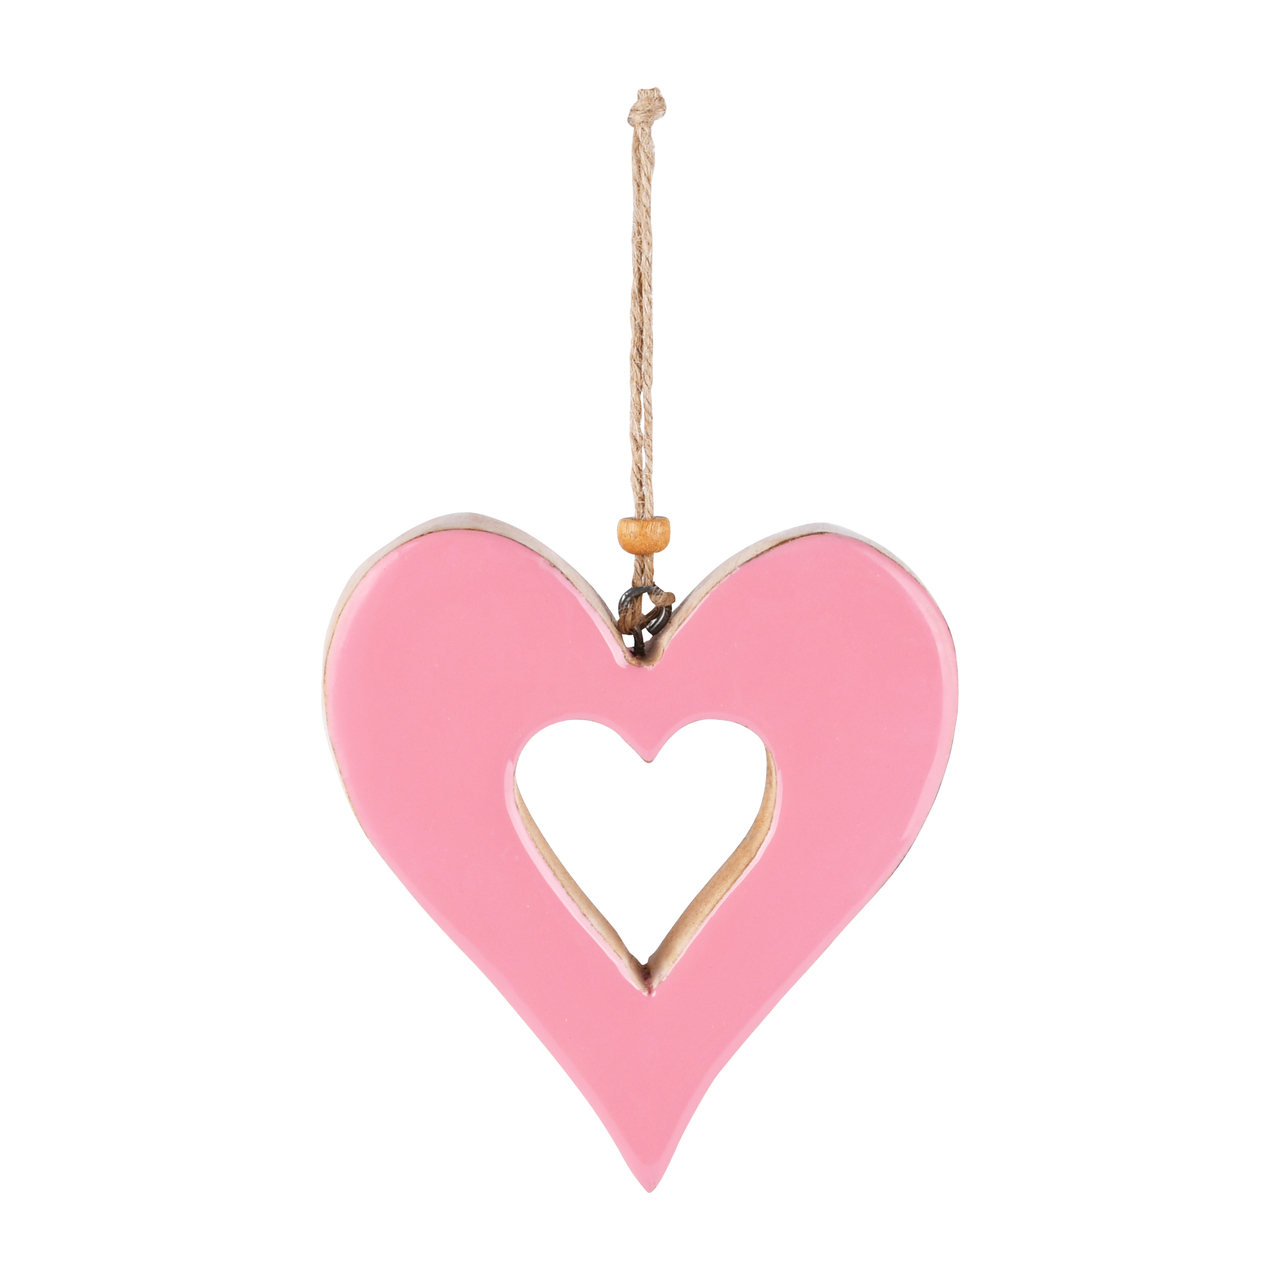 Dekoratief | Hanger hart roze, hout/email, 11x10x2cm | A220842